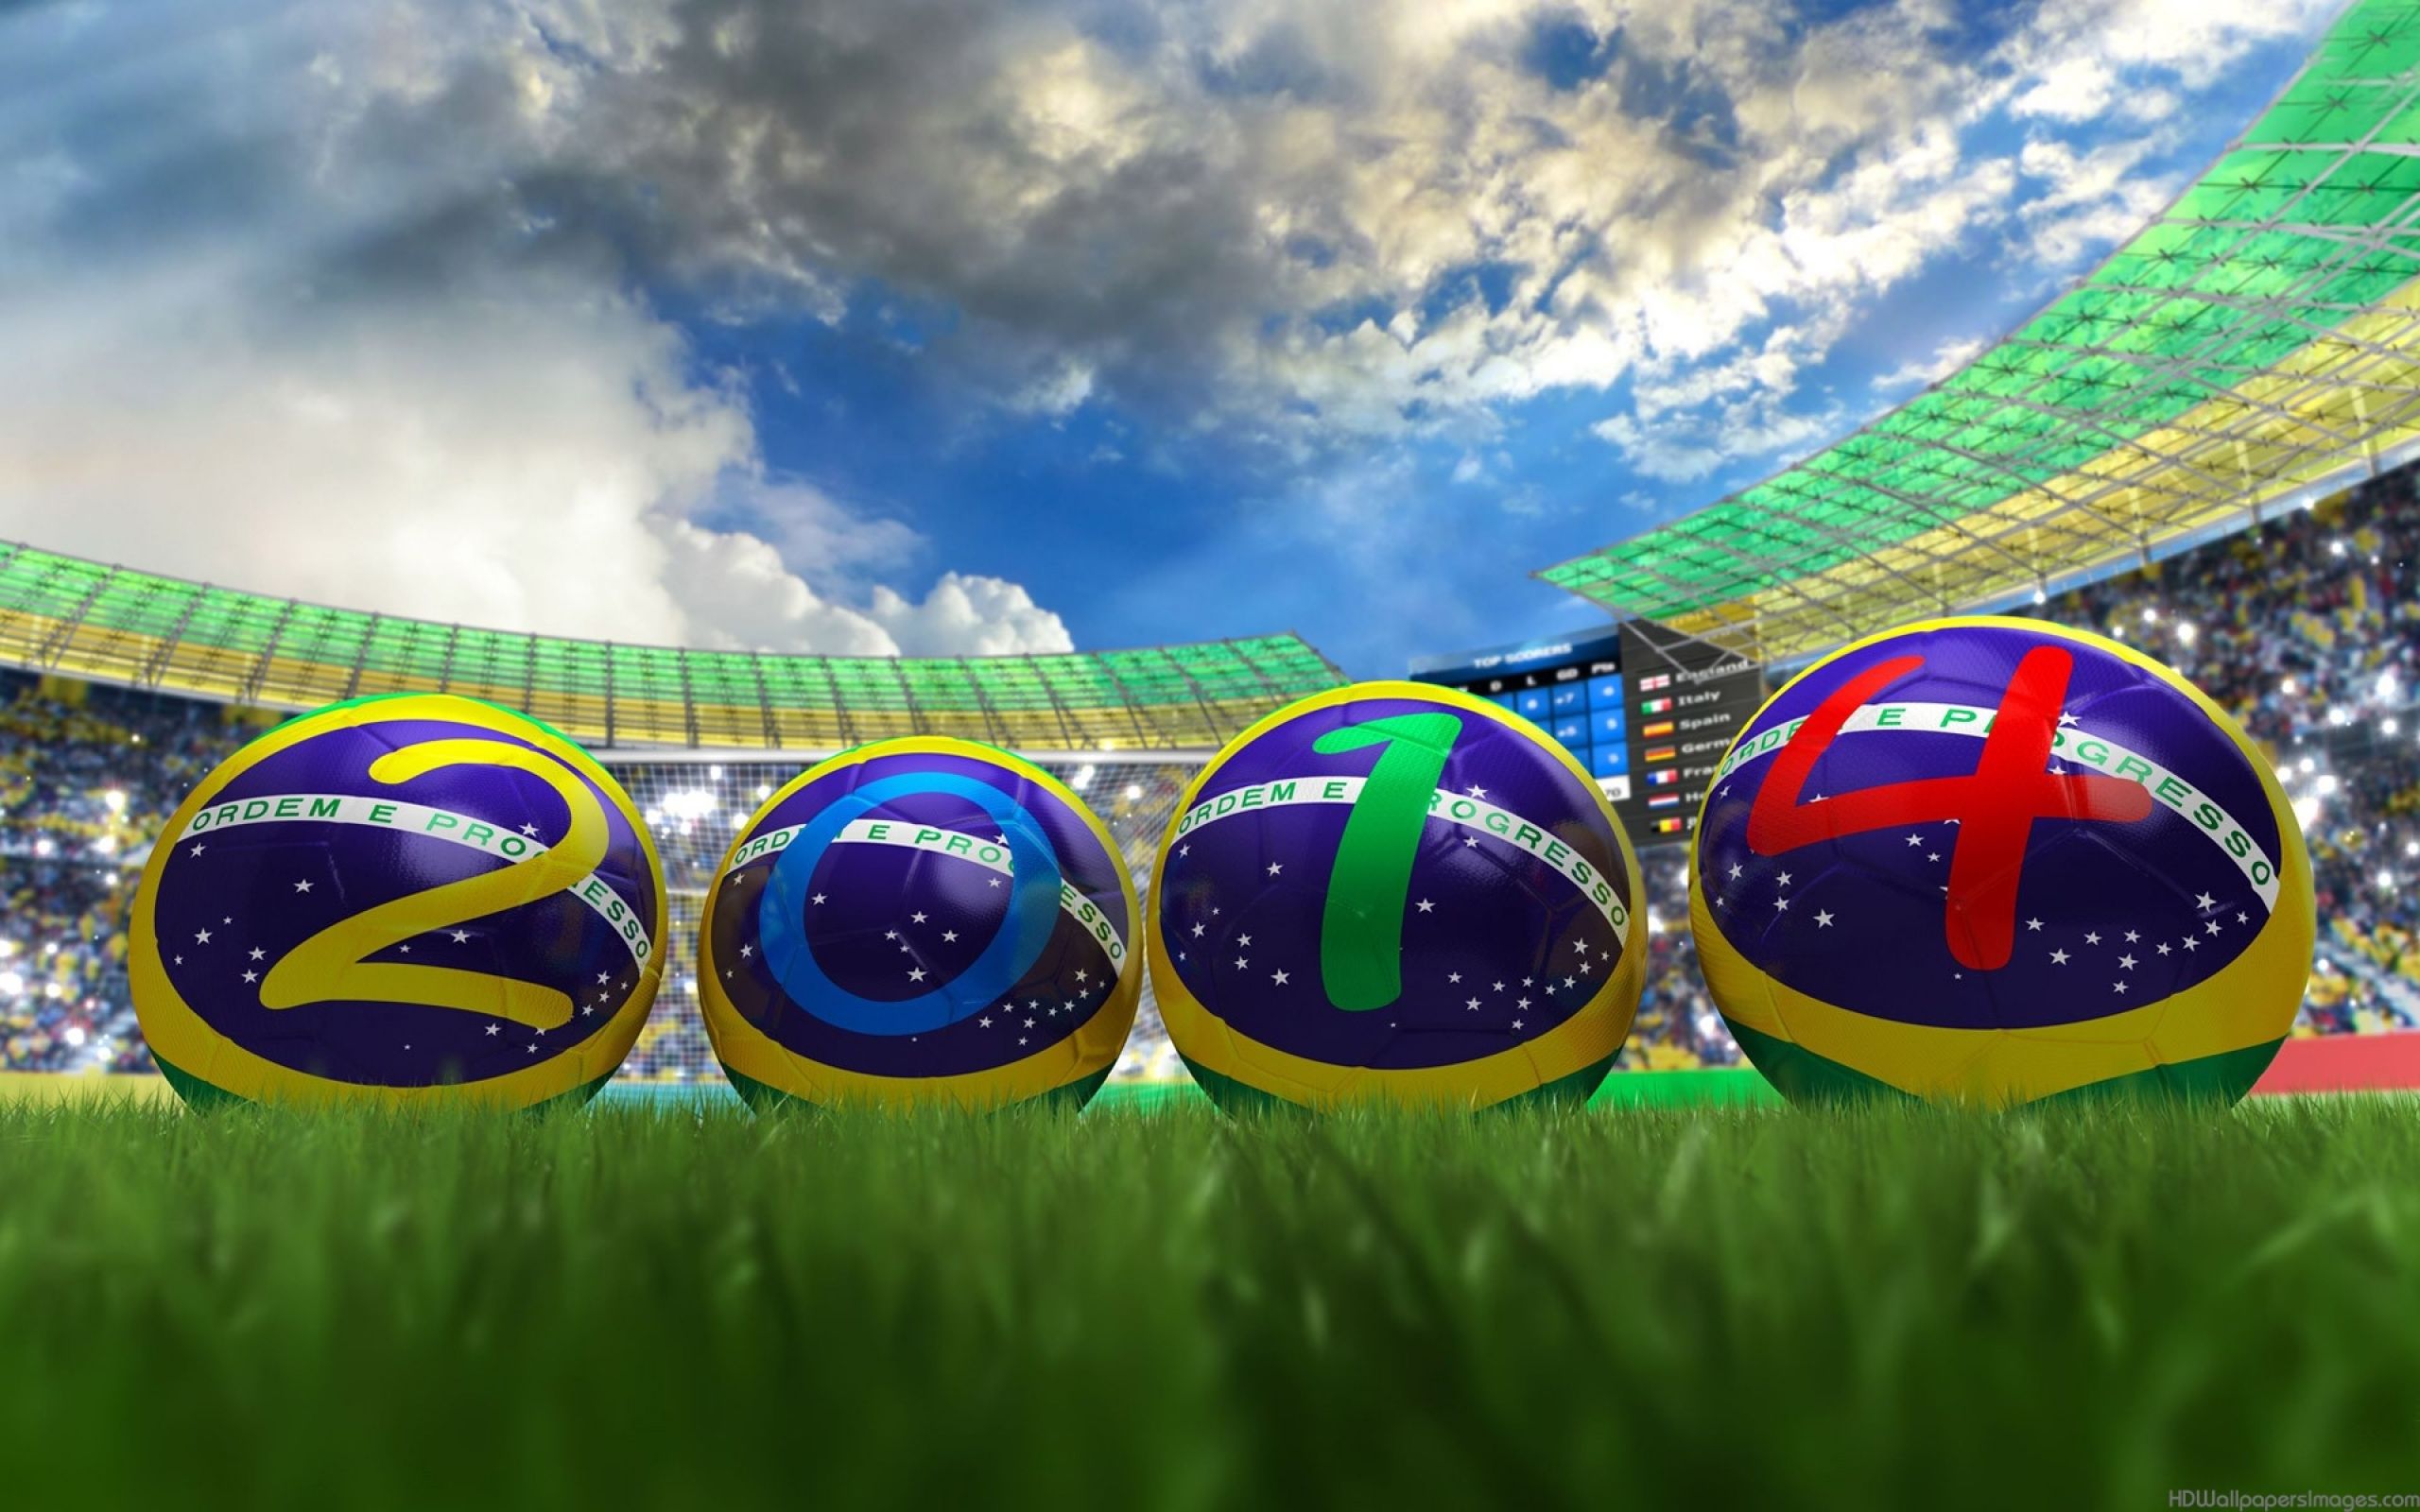 World cup 2014. Мяч ЧМ Бразилия 2014. The World Cup 2014 Brazil мяч.